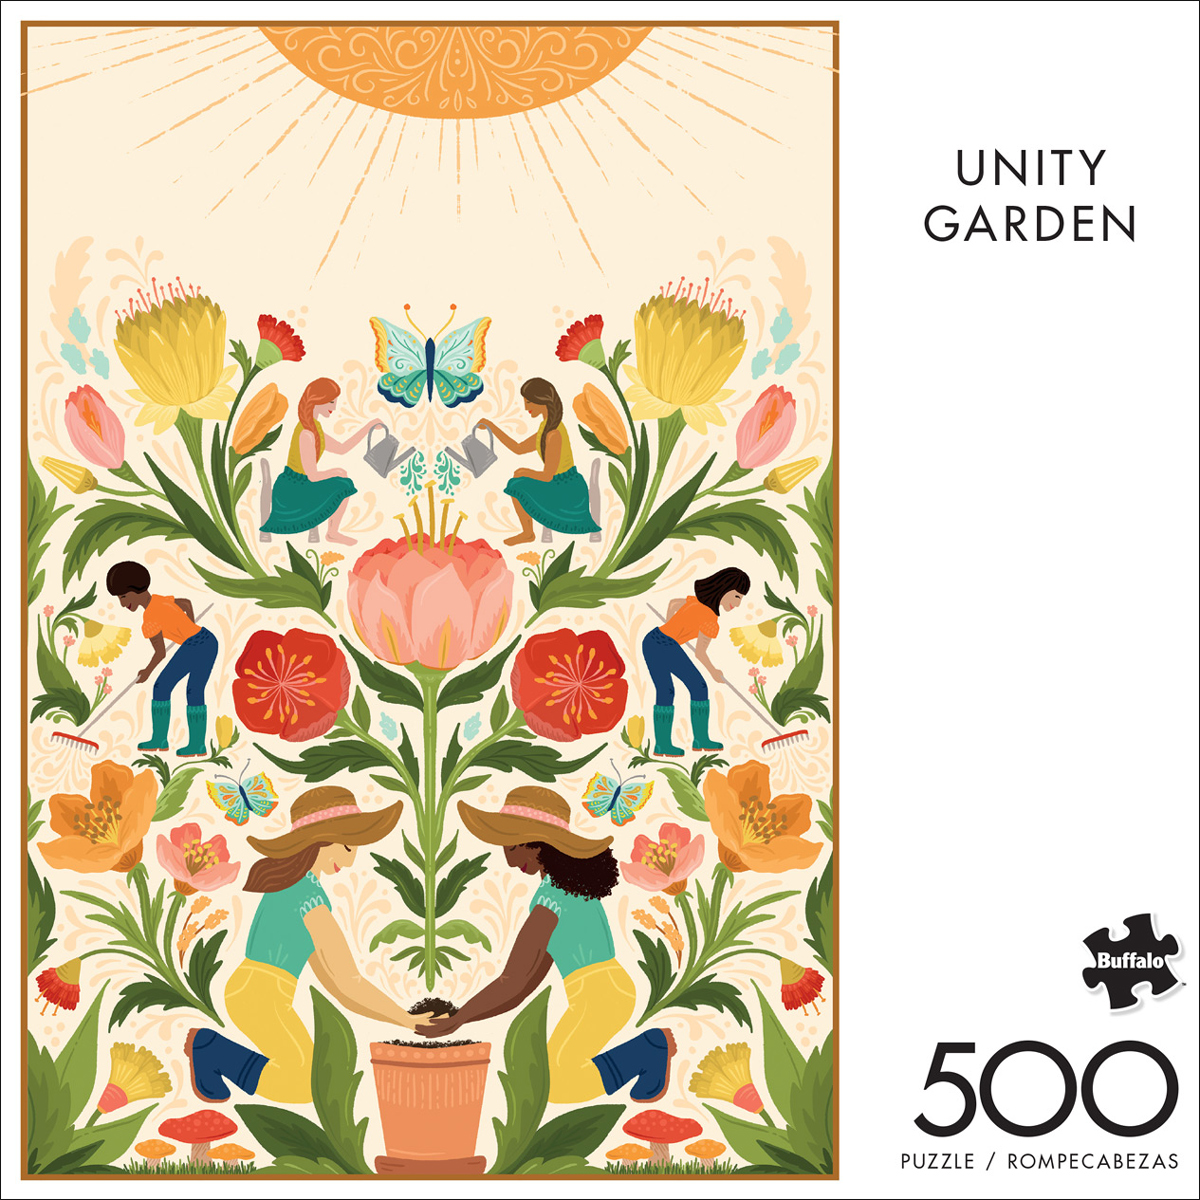 Unity Garden